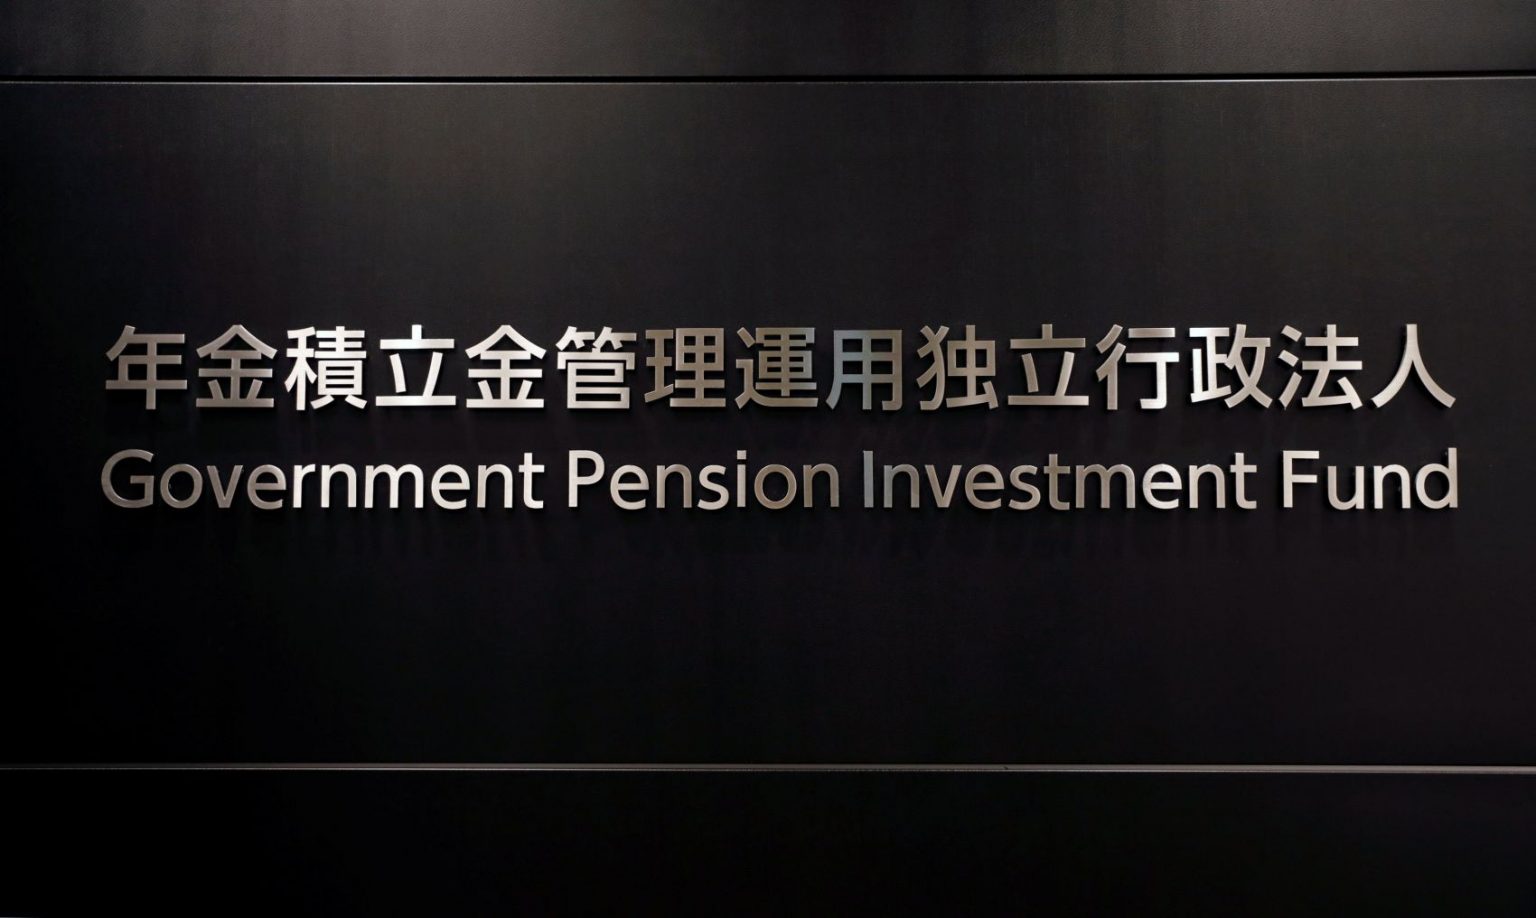 Japan's Pension Fund